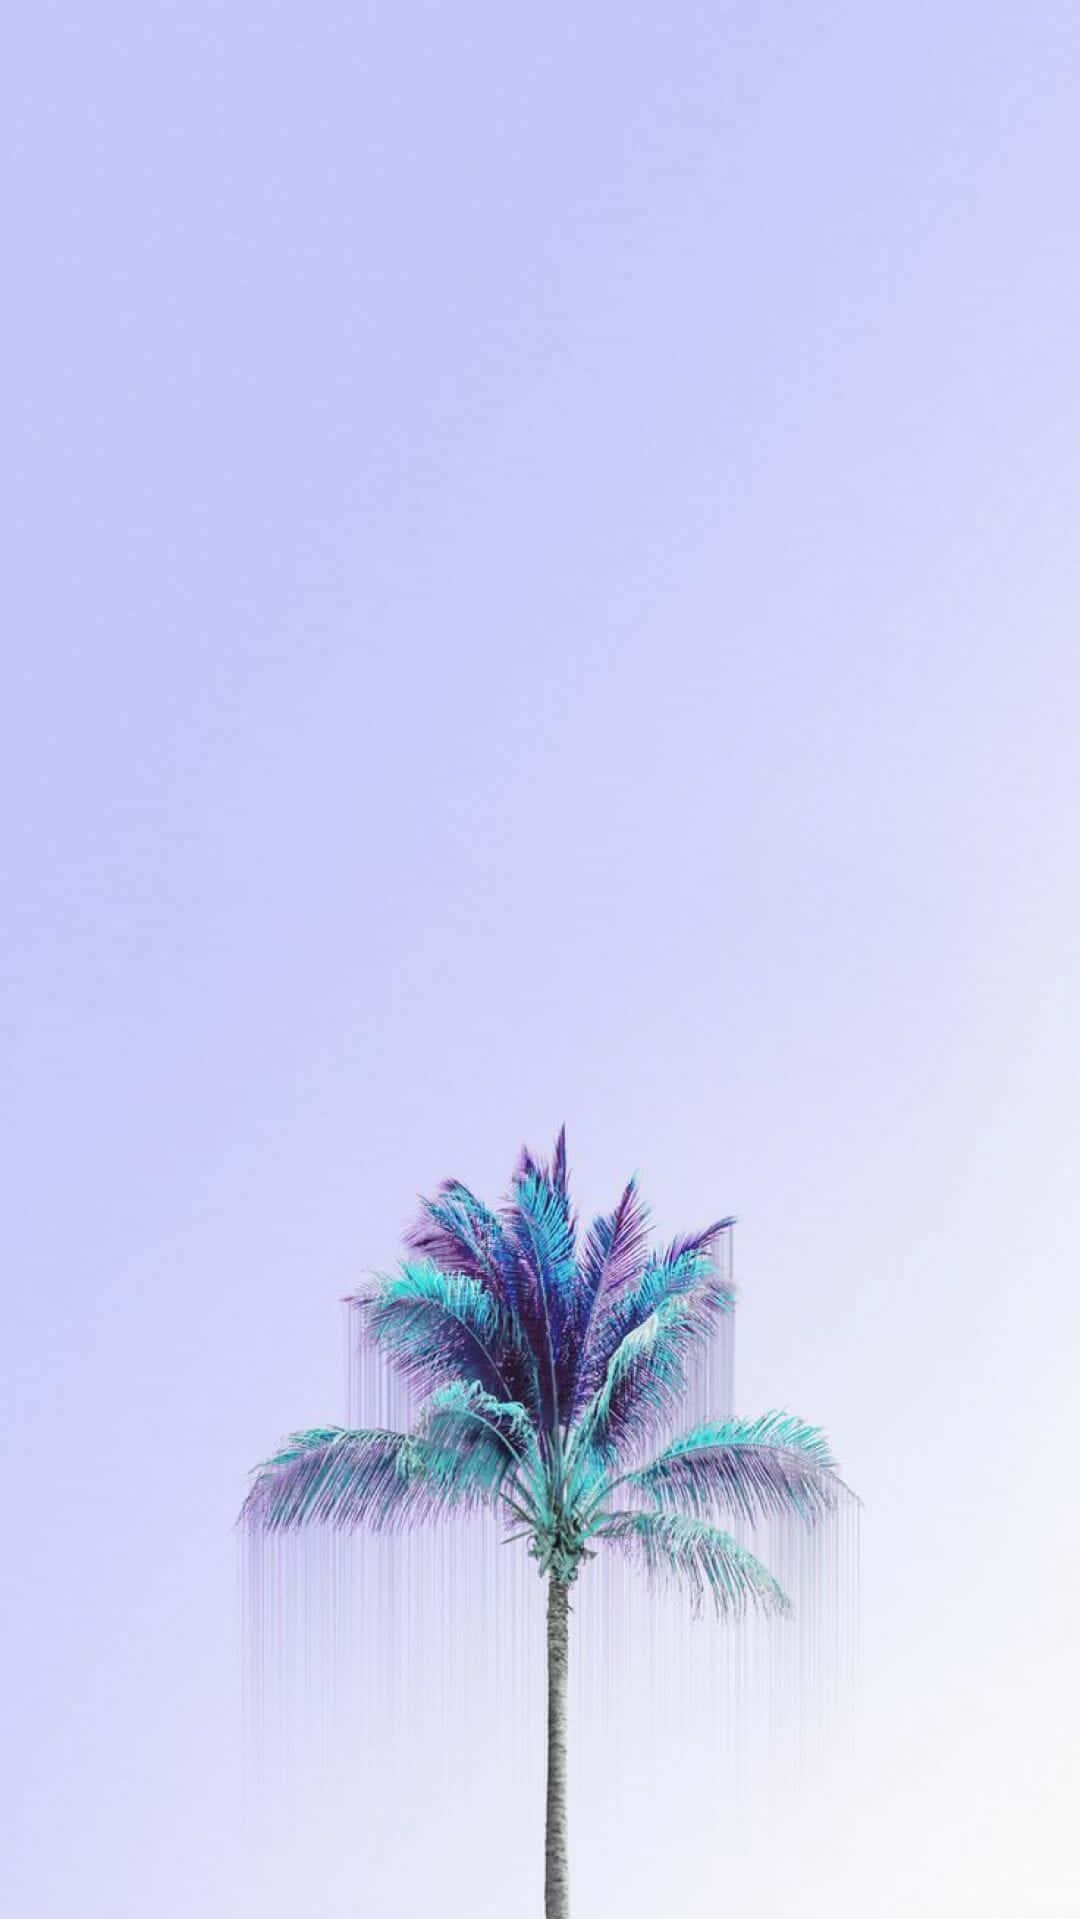 A Palm Tree In A Blue Sky Wallpaper